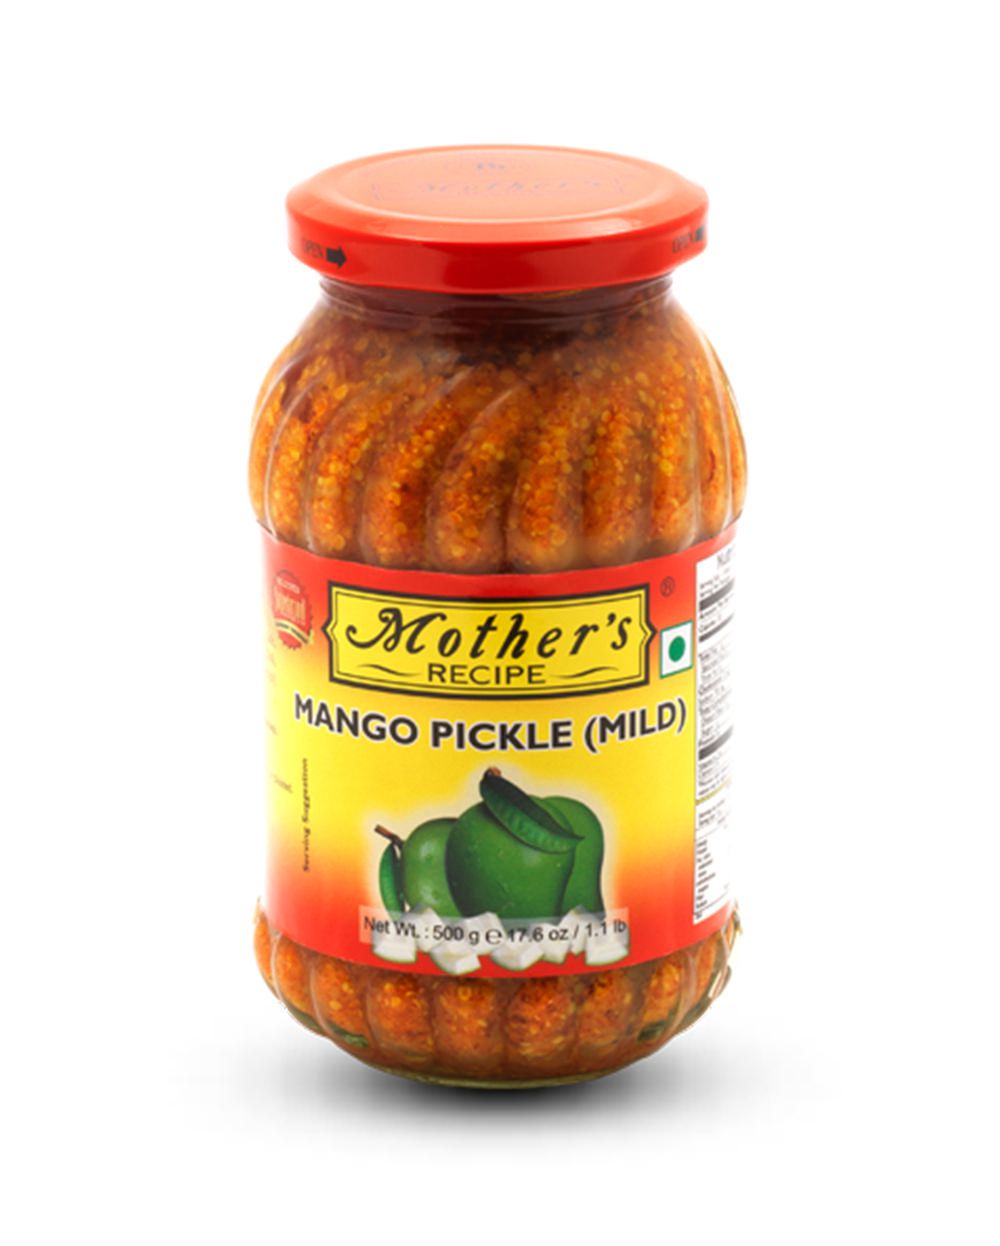 Mother's Recipe Mango Pickle - Mild - 500g